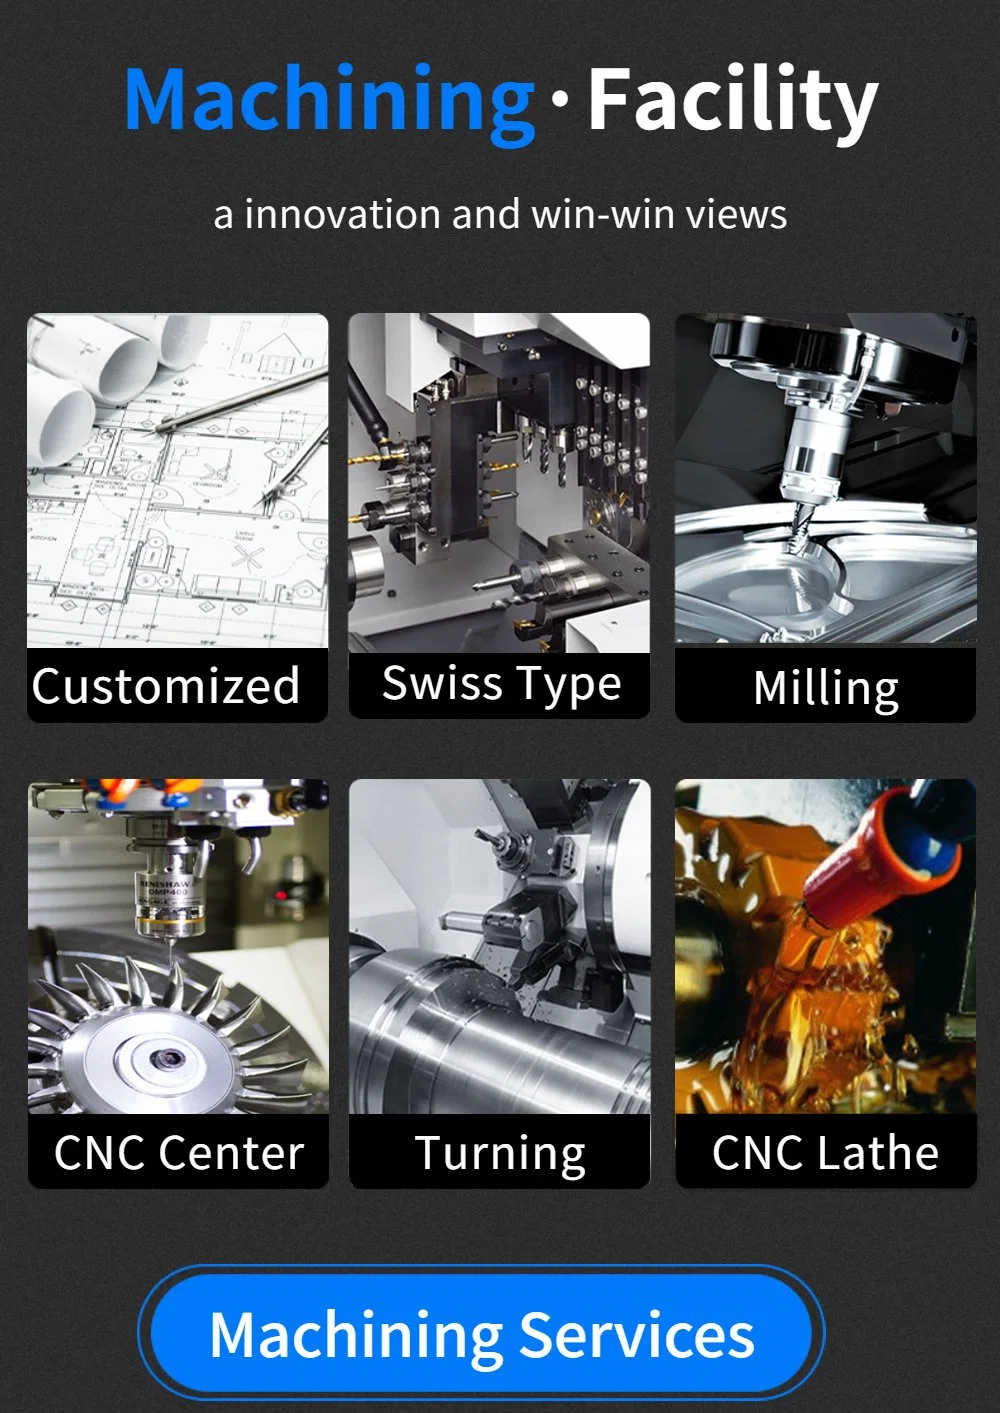 China CNC Manufacturing Companies High Precision CNC Milling Machining Small Metal Parts